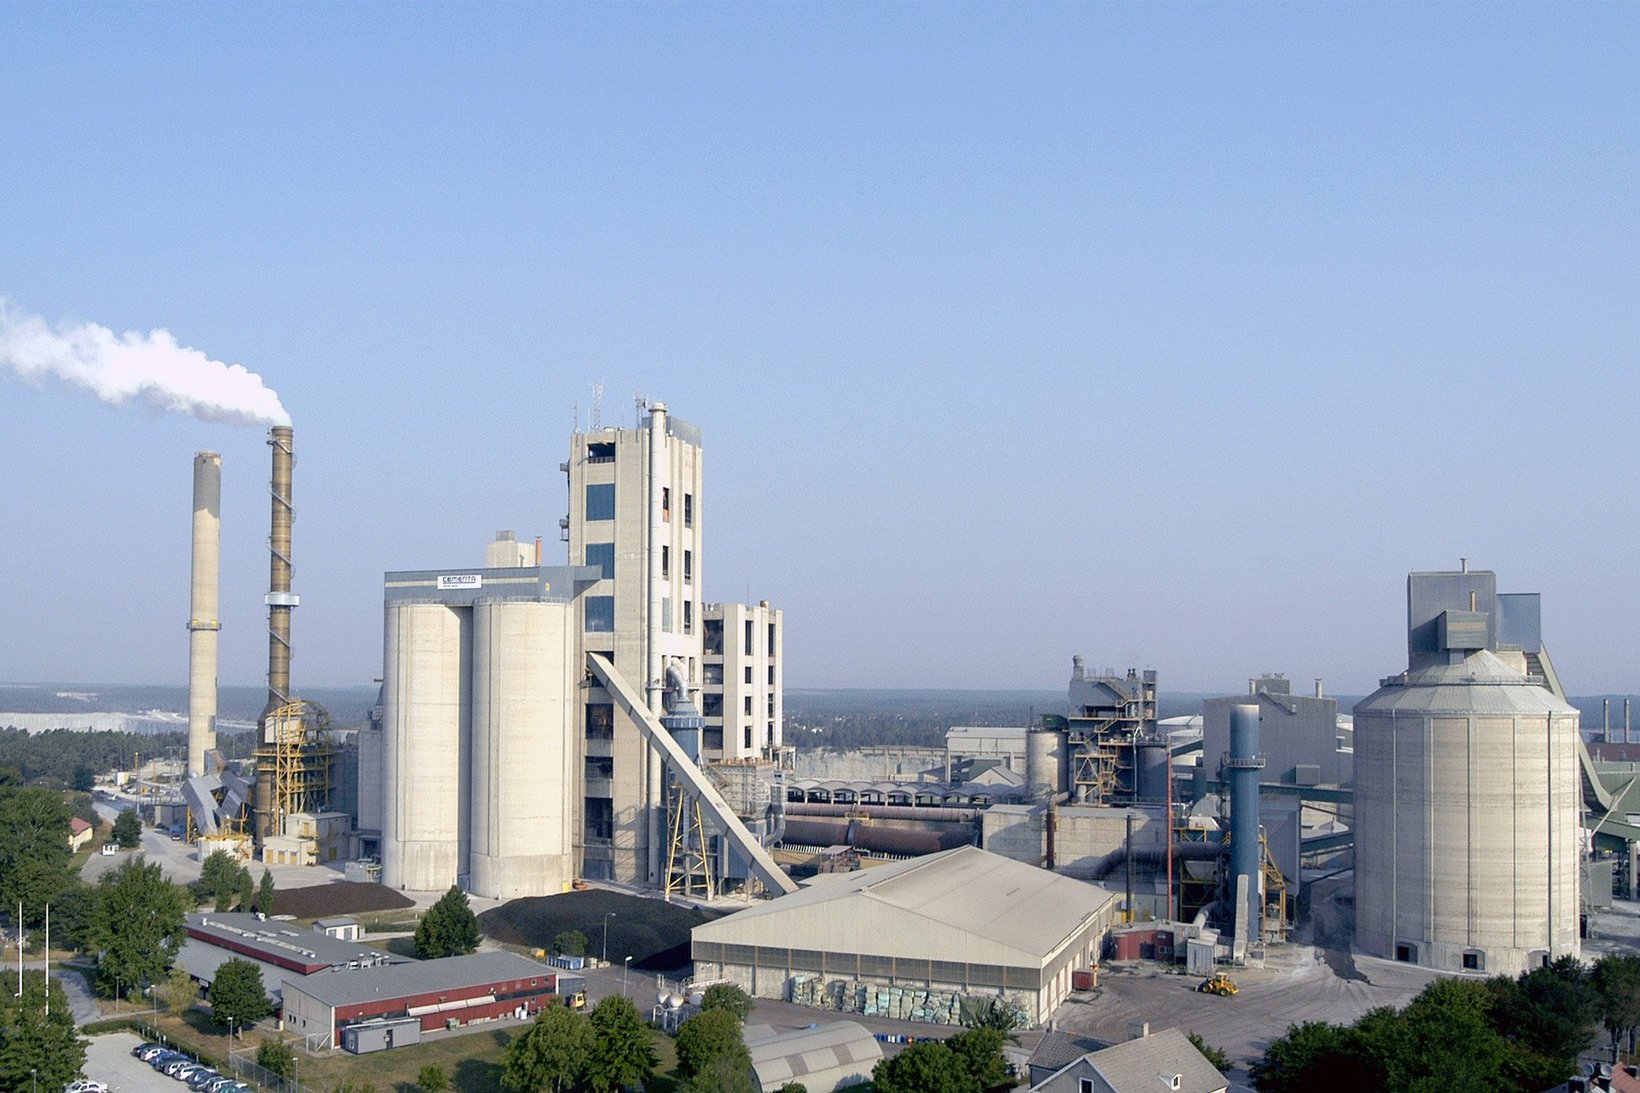 Cementa’s factory in Slite, Sweden